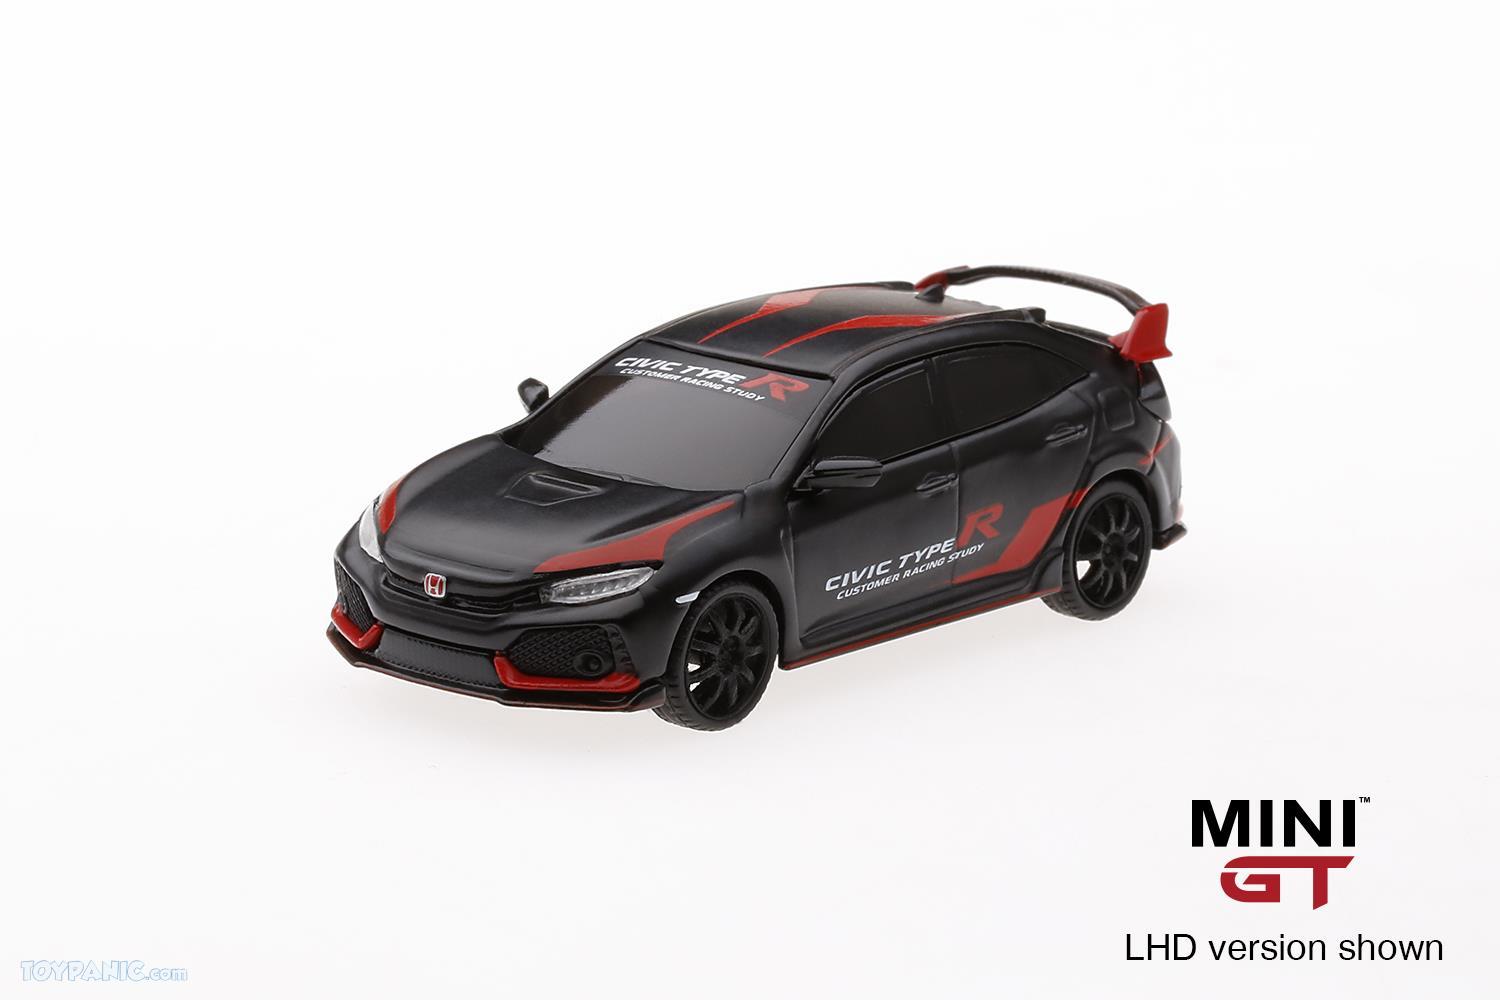 Mini-GT 1:64 Overseas Edition LHD HONDA CIVIC Type-R FK8 Customer Racing Study